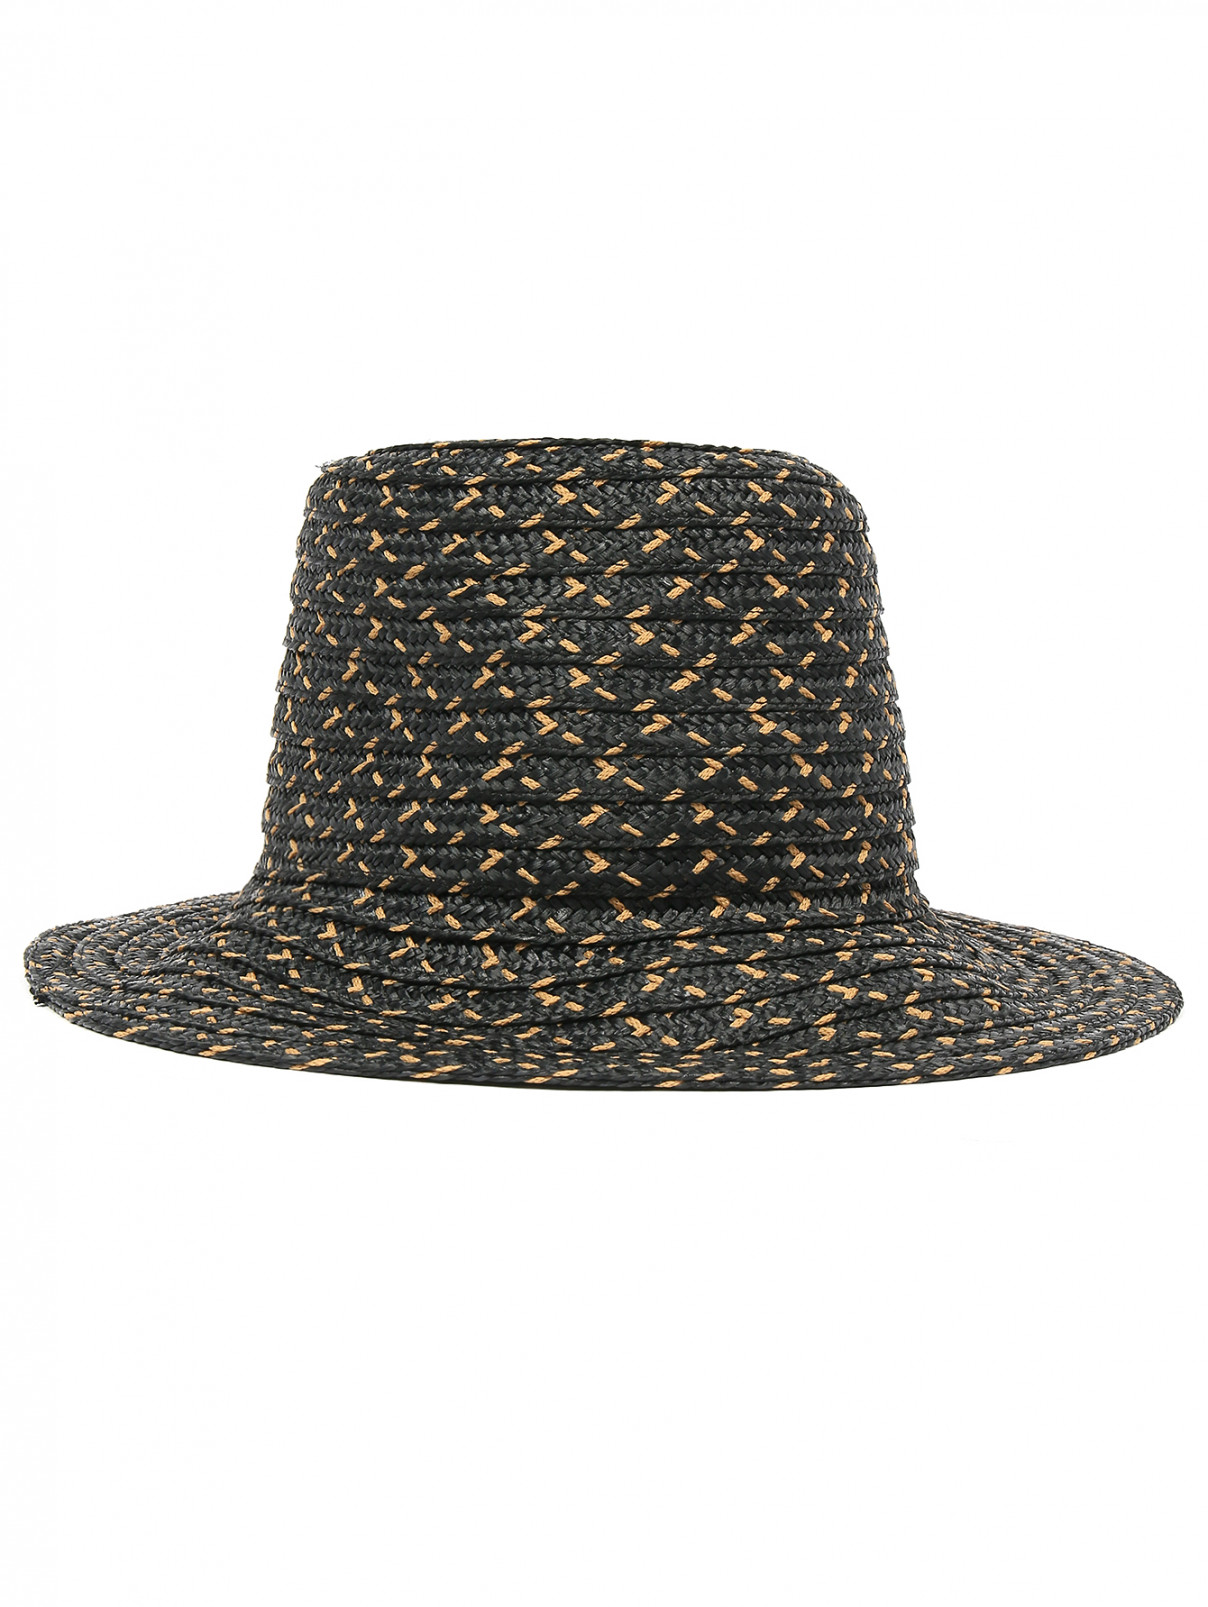 Шляпа с узором Weekend Max Mara  –  Общий вид  – Цвет:  Узор